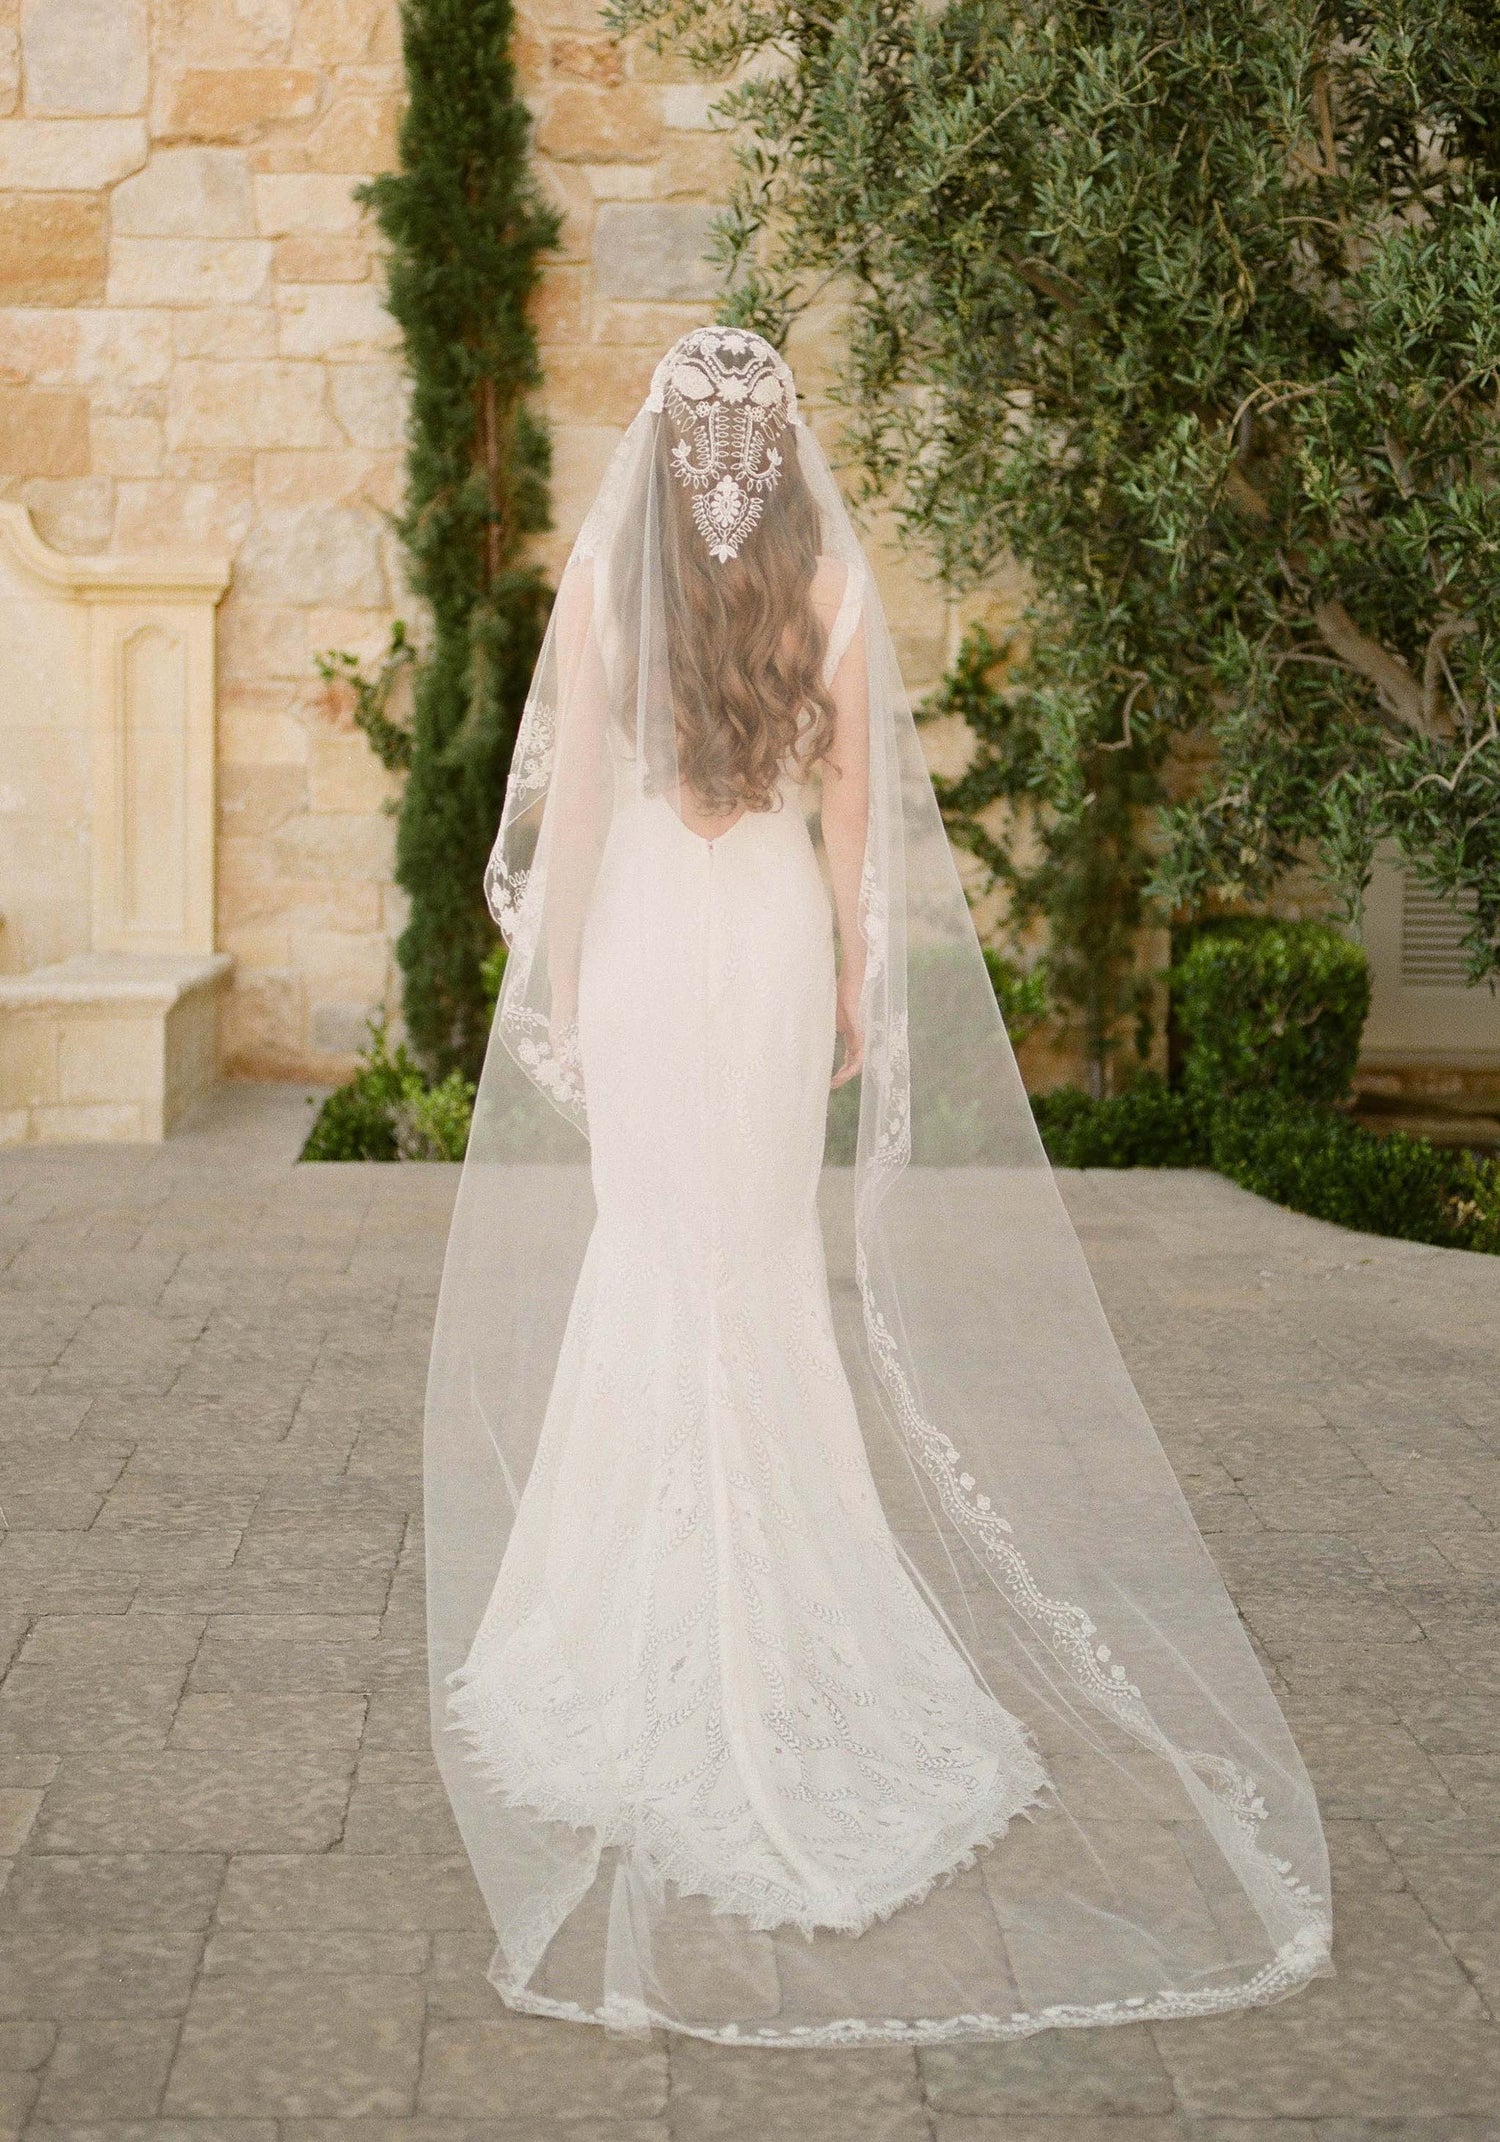 Wedding Veil, Tulle Bridal Veil Wedding Long Veil, Bride Wedding Veil,  White, Ivory Cathedral Long Veil, Simple 